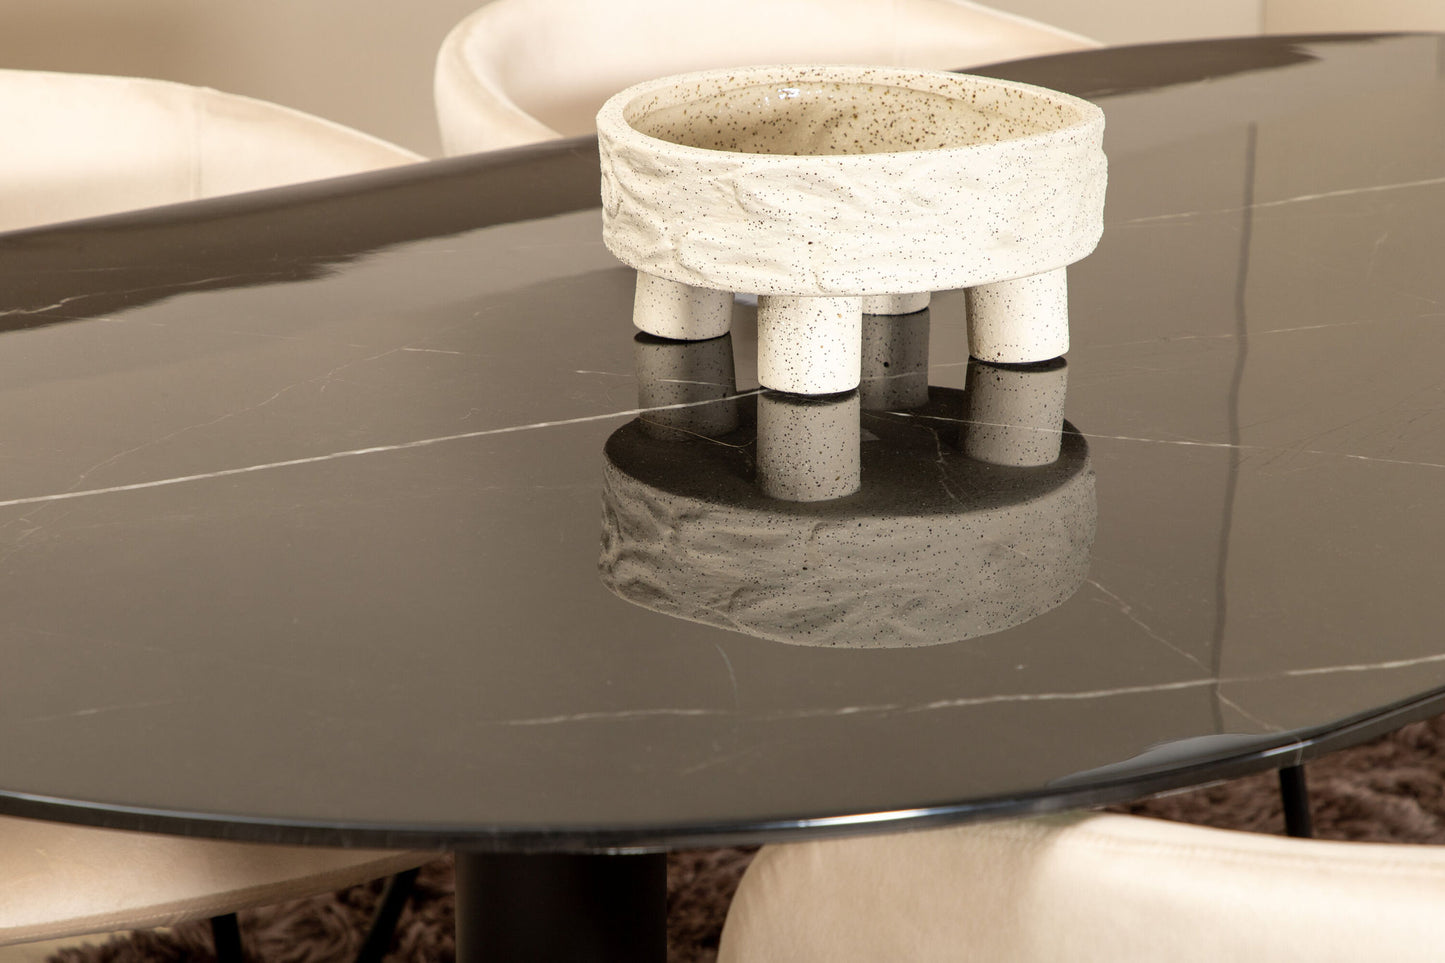 Pillan - Ovalt spisebord, Sort glas Marmor+Berit Stol, Sort Beige velour